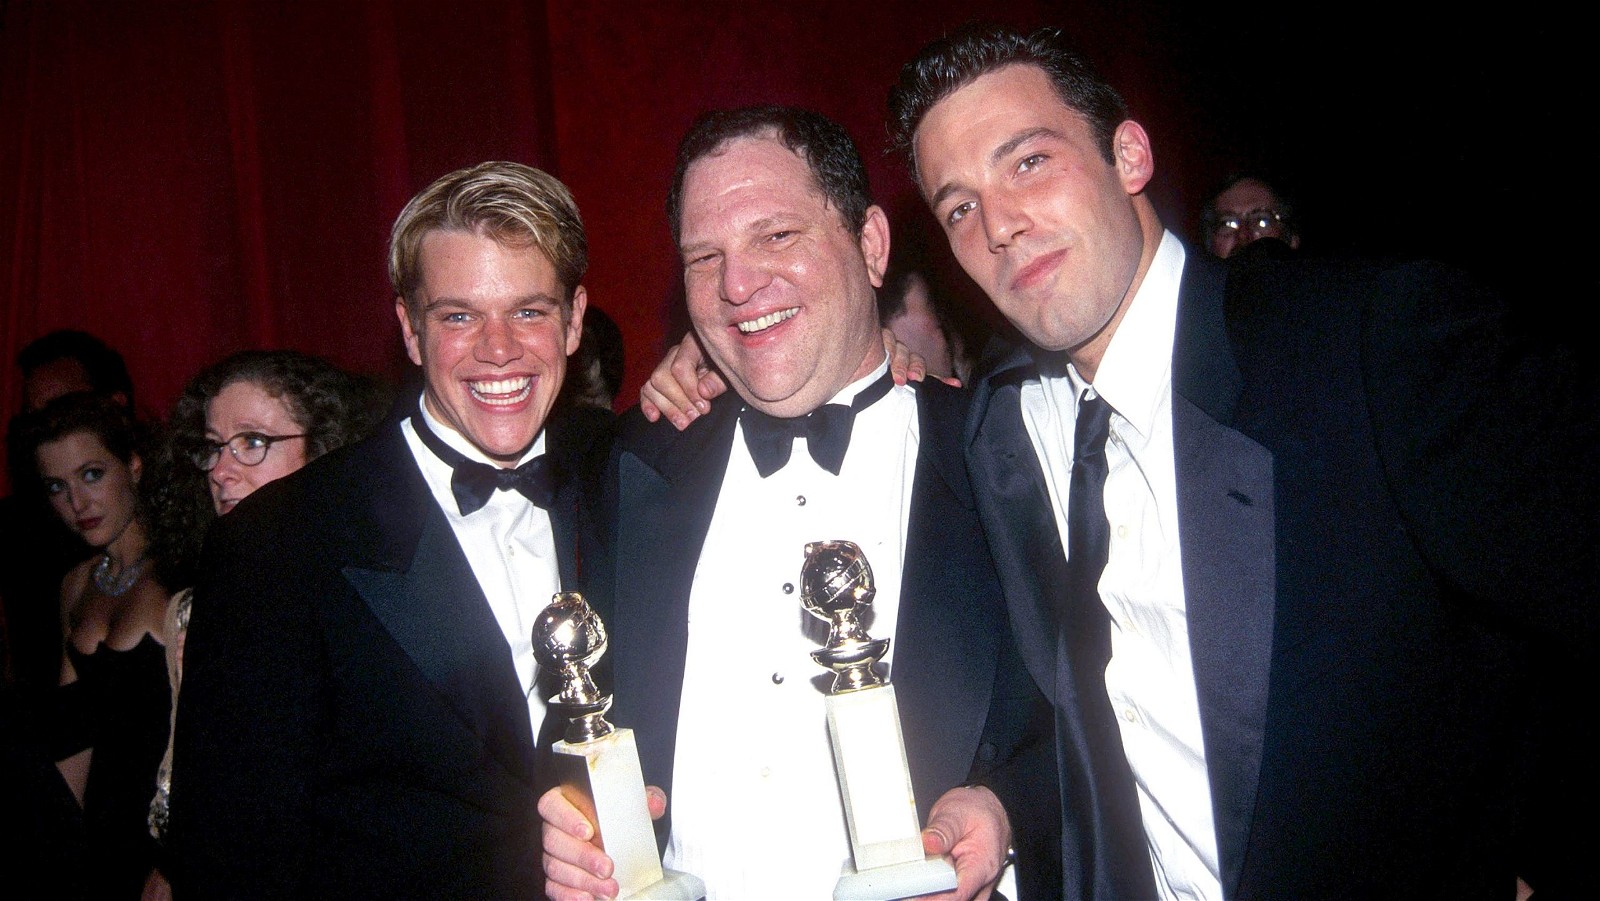 Matt Damon and Ben Affleck with Harvey Weinstein